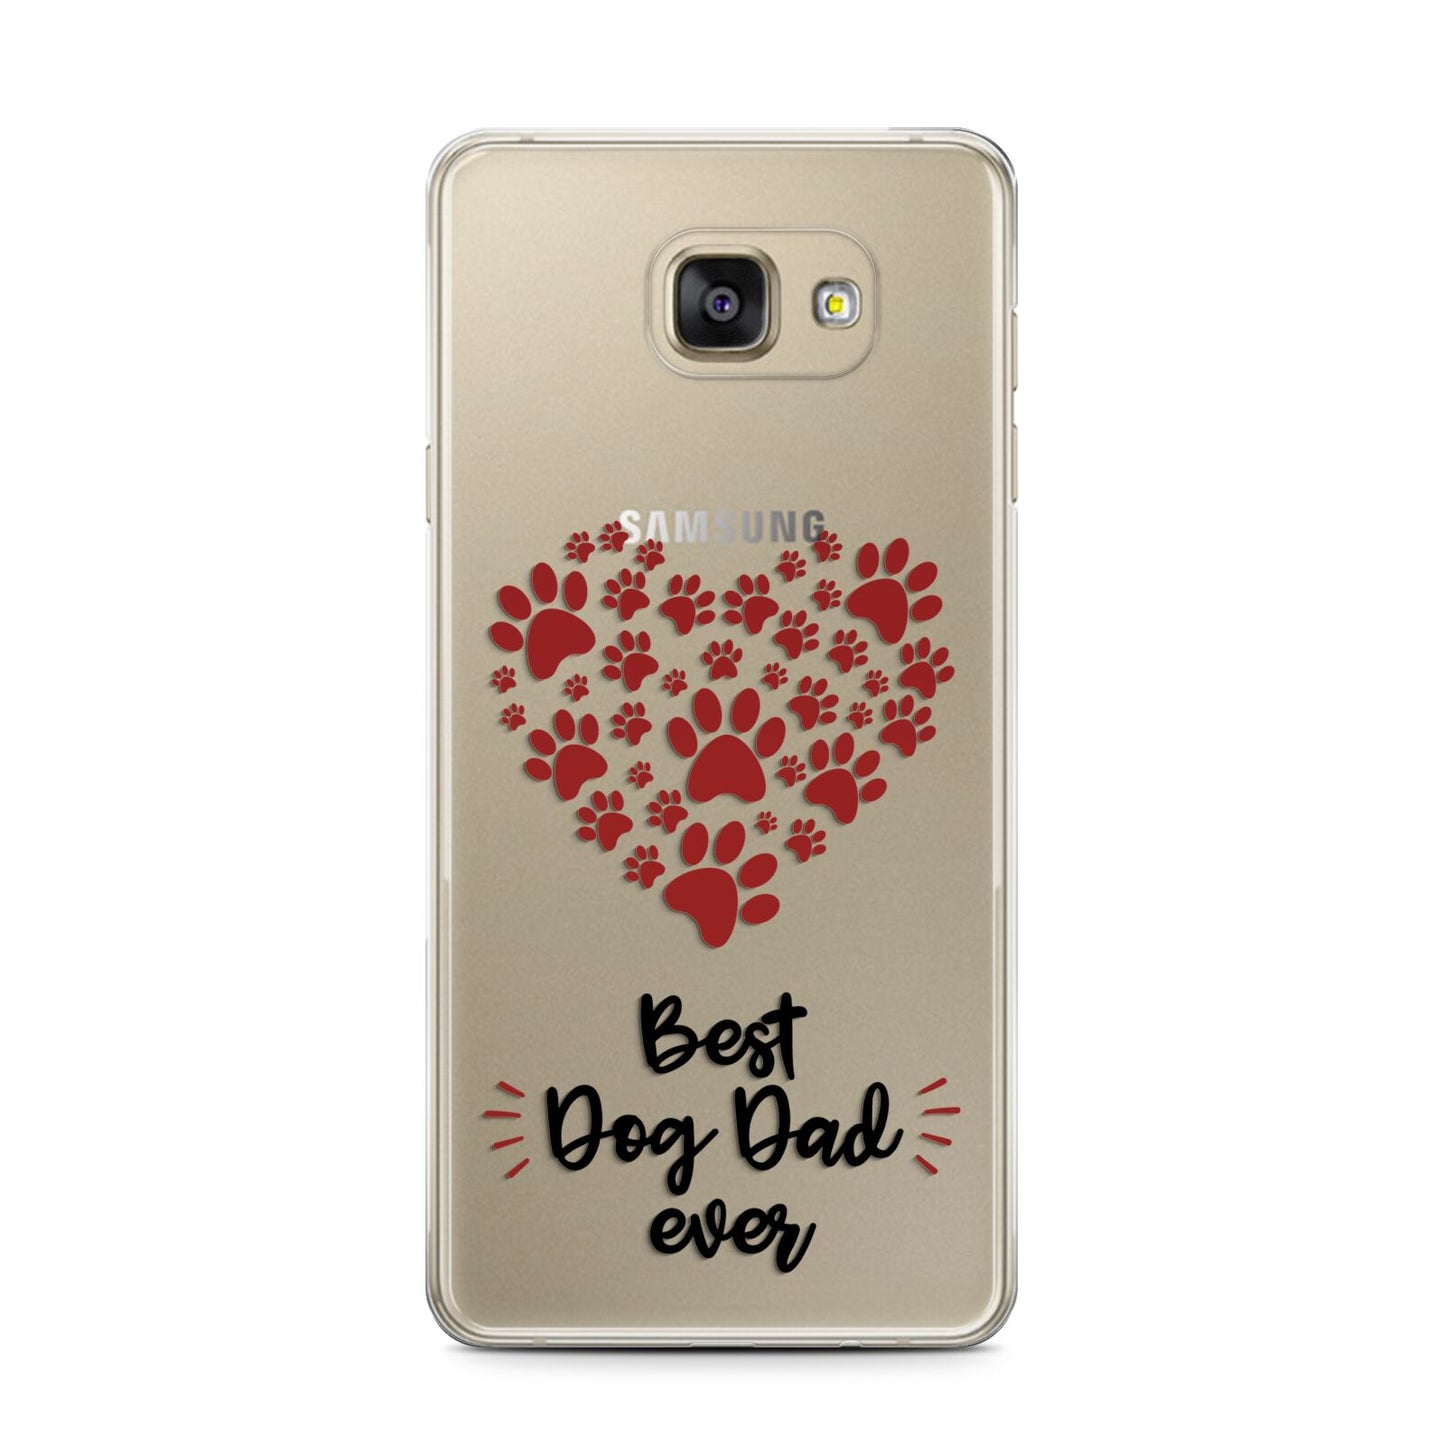 Best Dog Dad Paws Samsung Galaxy A7 2016 Case on gold phone